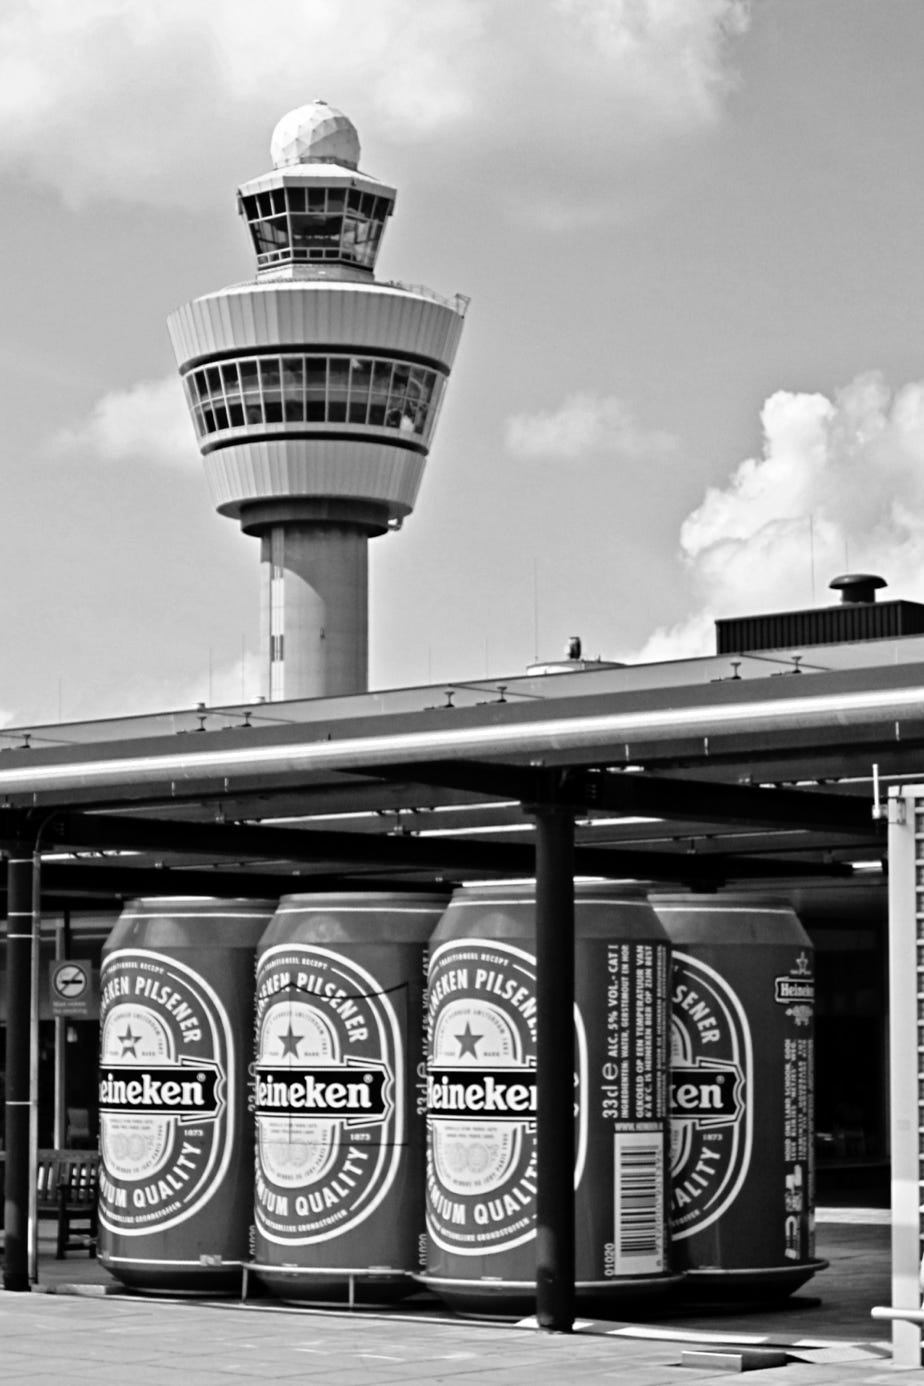 Heineken "beer" at Schiphol airport. Amsterdam